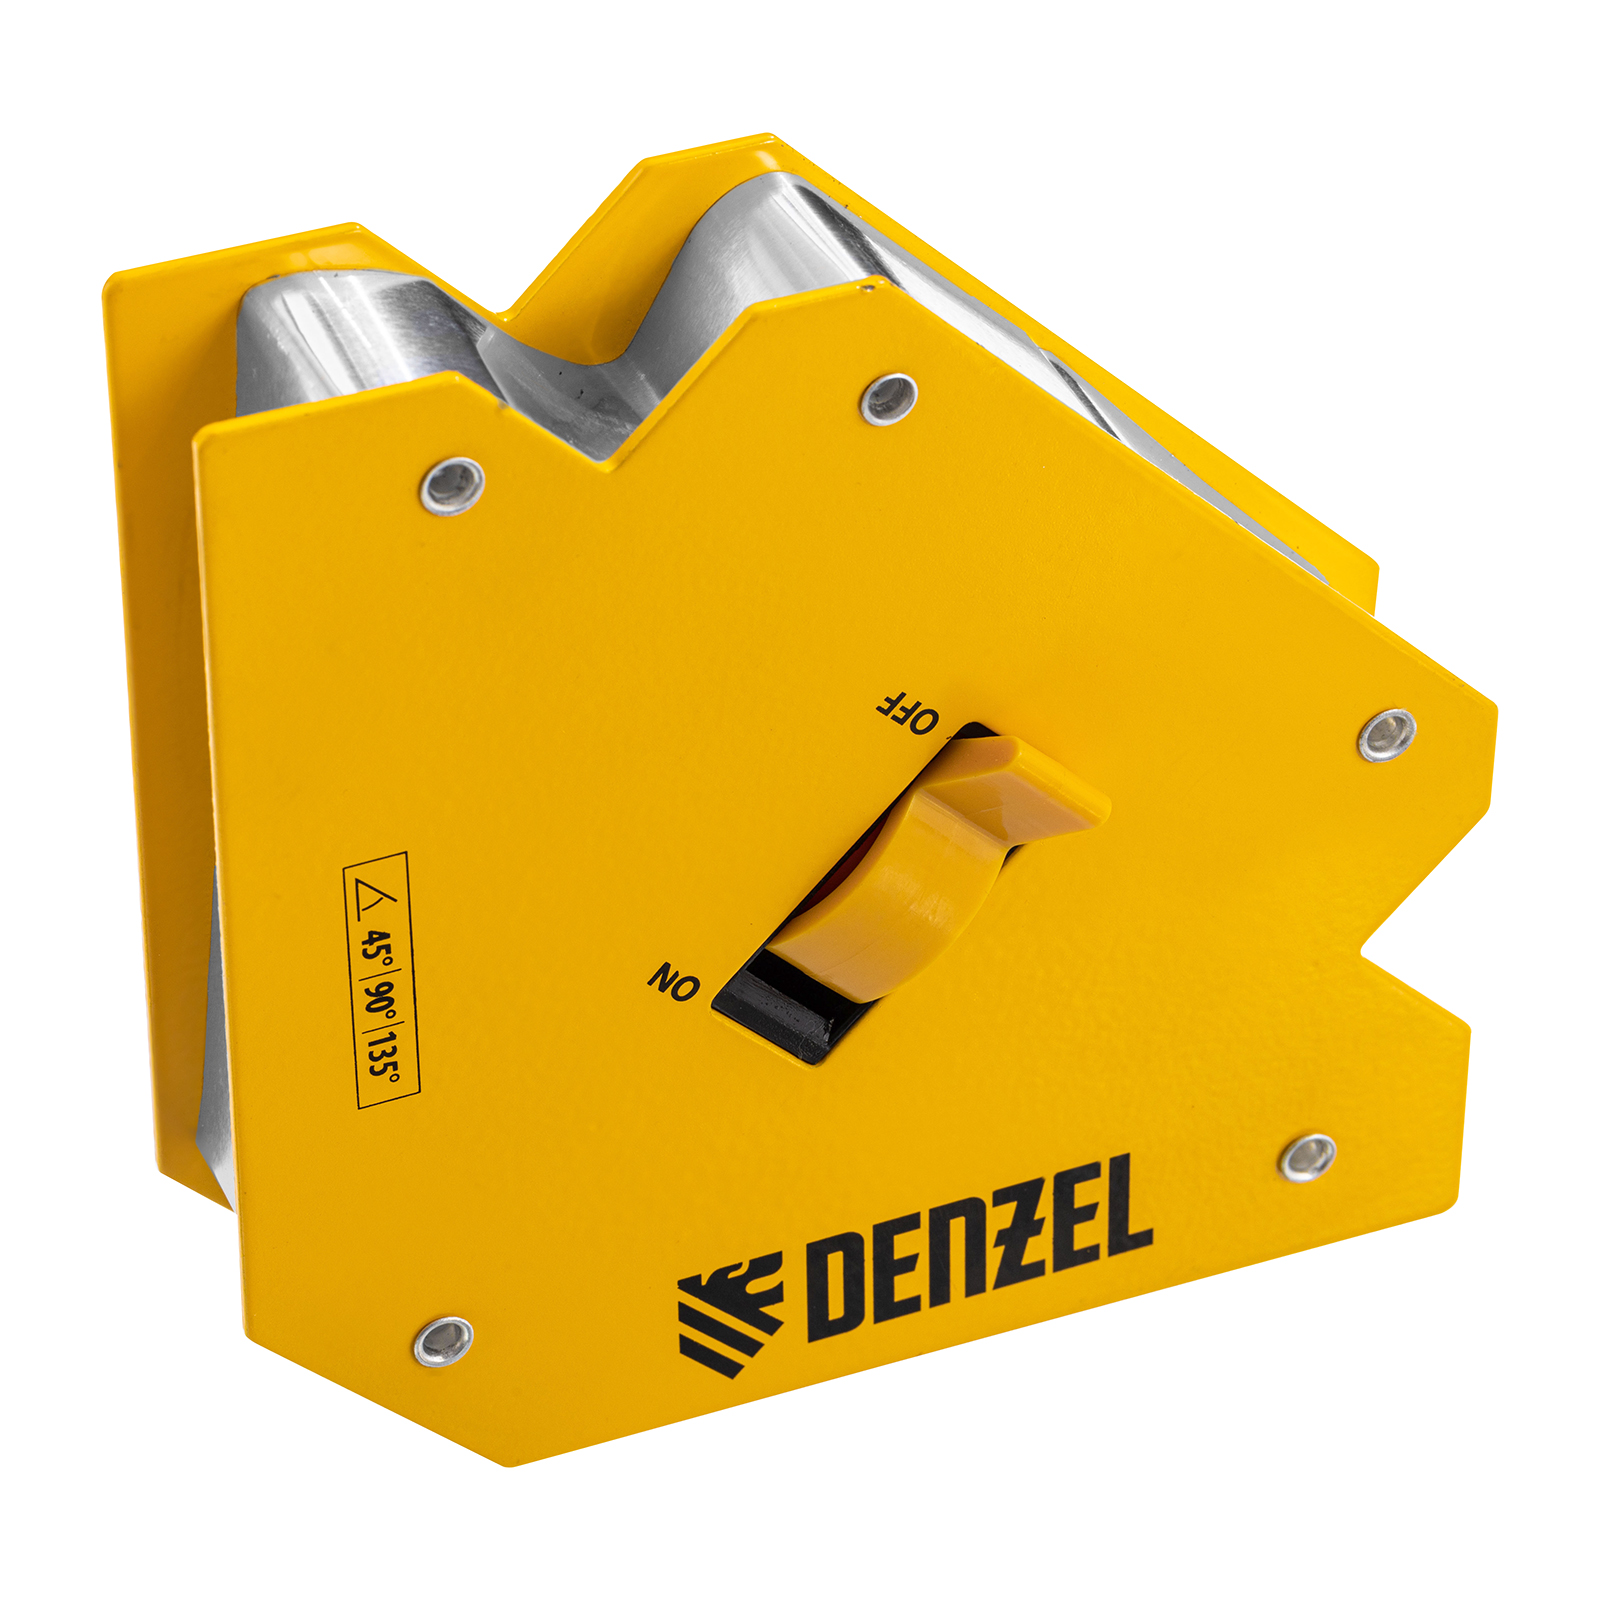 Фиксатор магнитный отключаемый для сварочных работ DENZEL усилие 55 LB, 45х90х135 гр 97564 фиксатор магнитный для сварочных работ denzel усилие 25 lb 30х45х60х75х90х135 град 97566